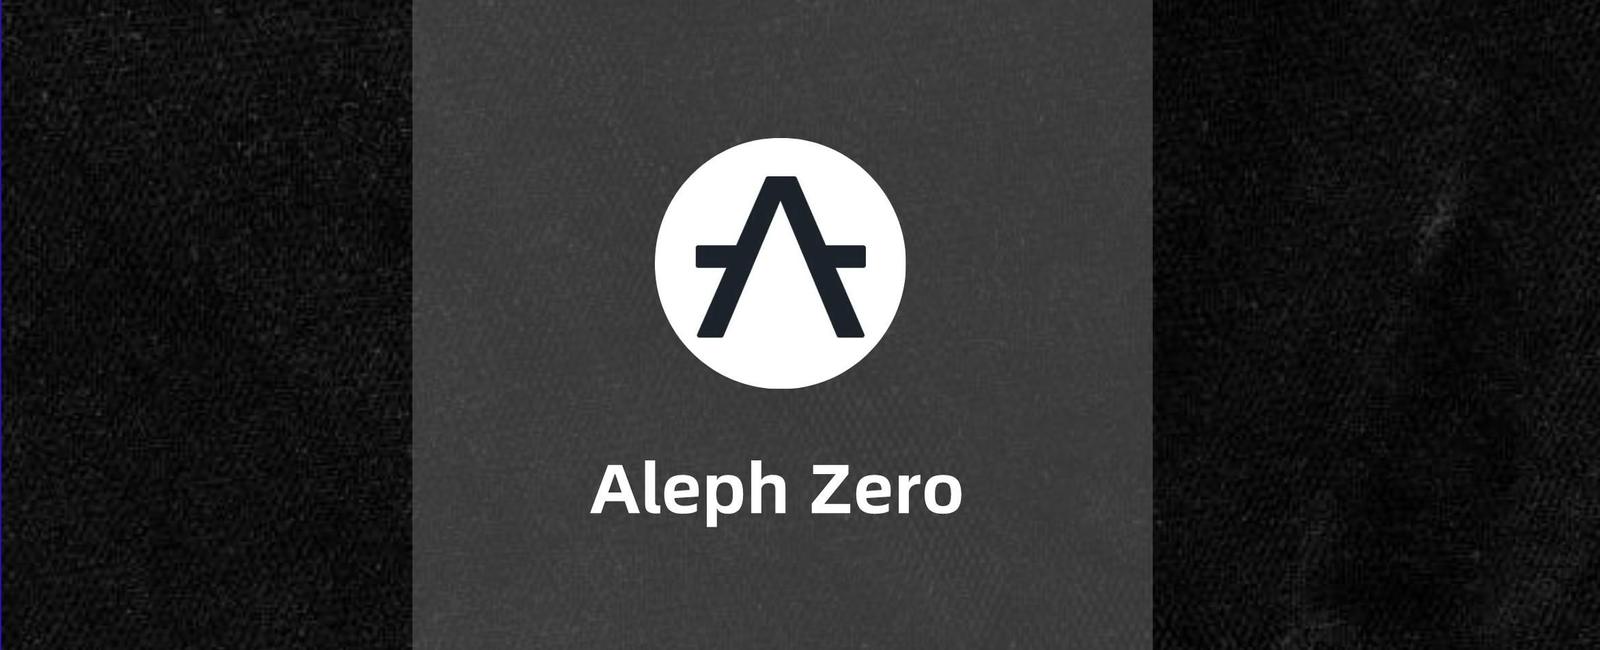 Aleph Zero-Zk与隐私碰撞的新故事